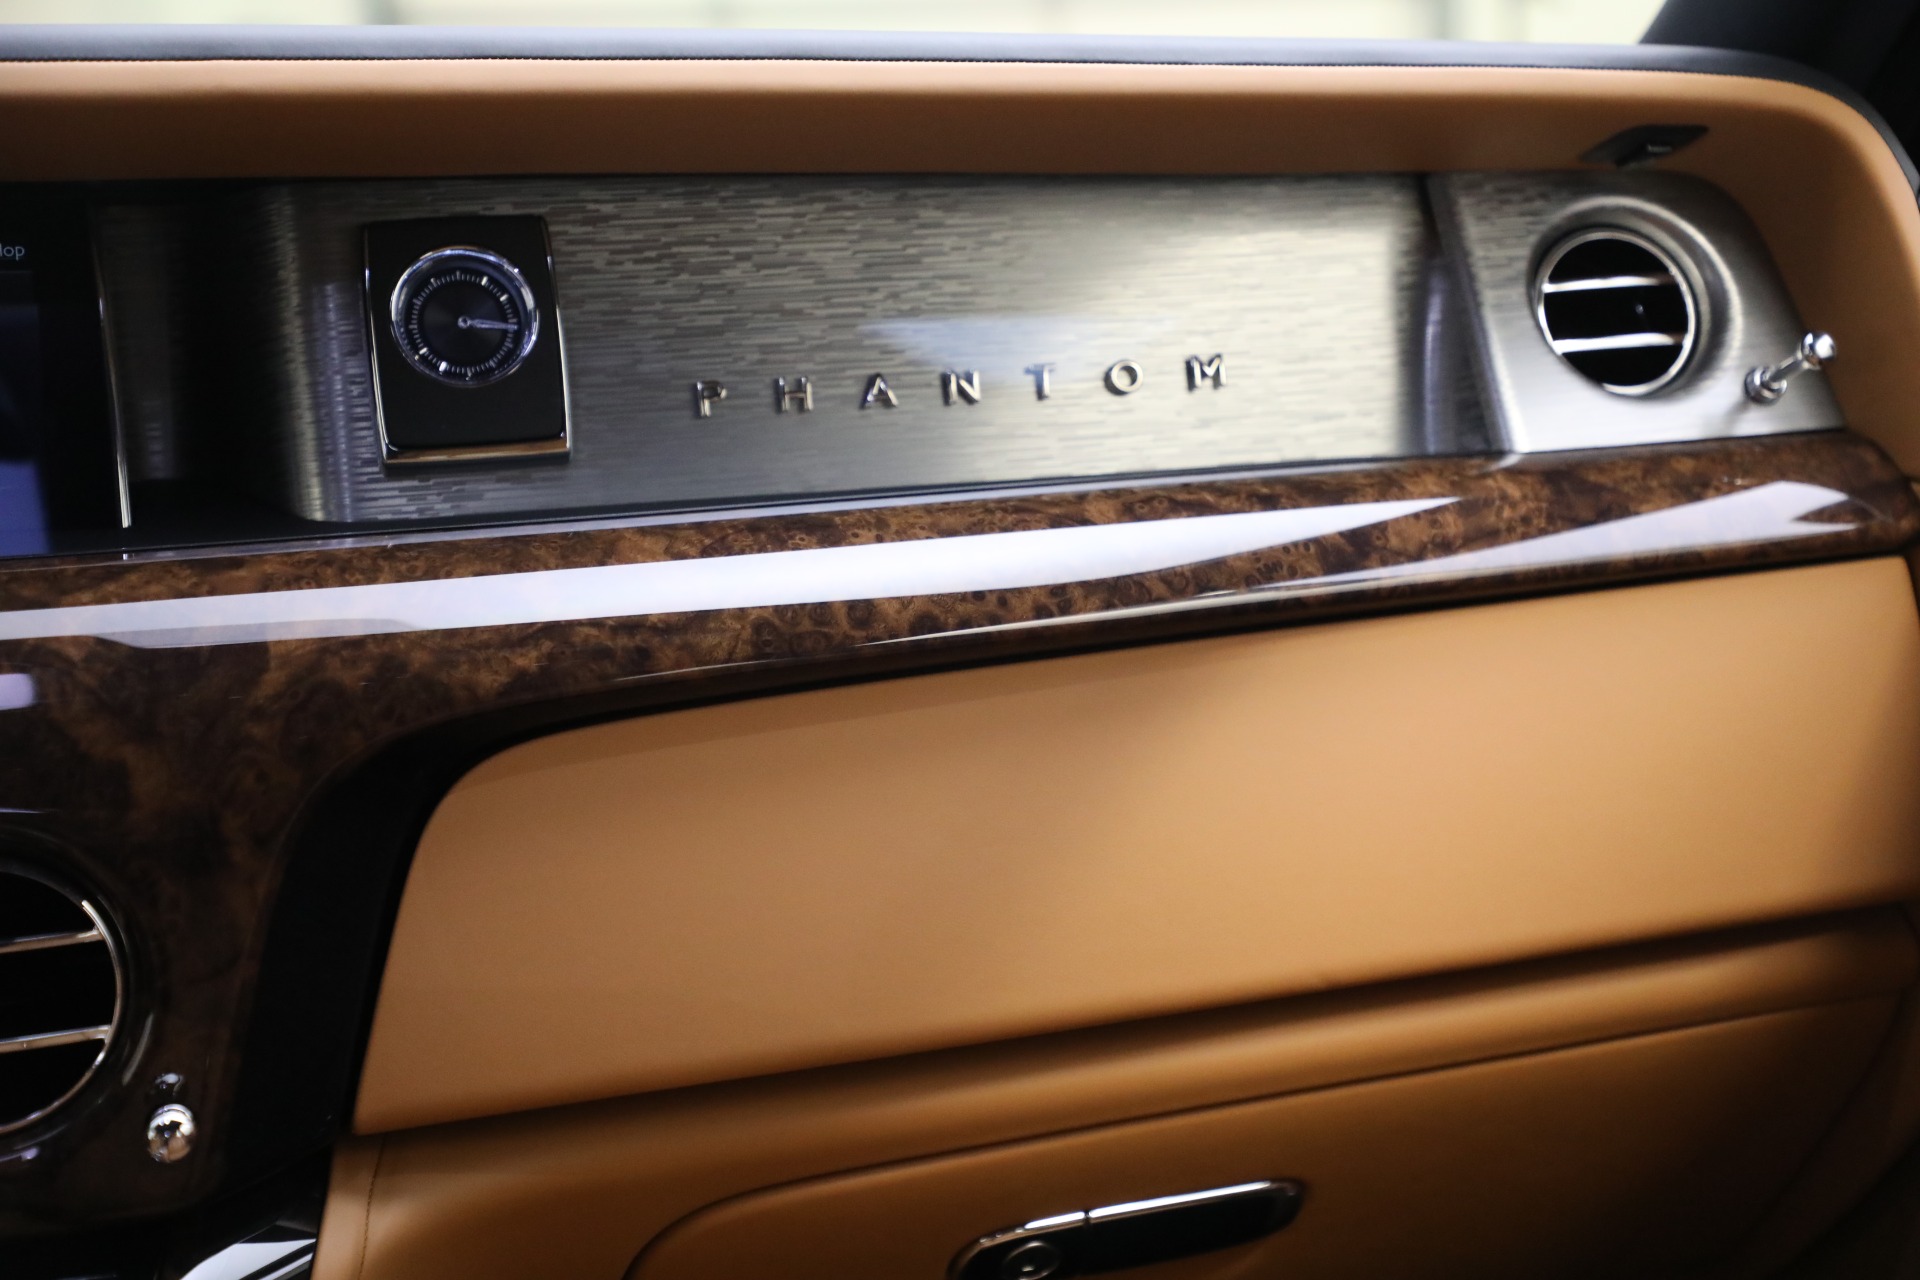 The V12 Rolls Royce Phantom. In stock at Galleywood now ✨🙏🏼 #rollsro